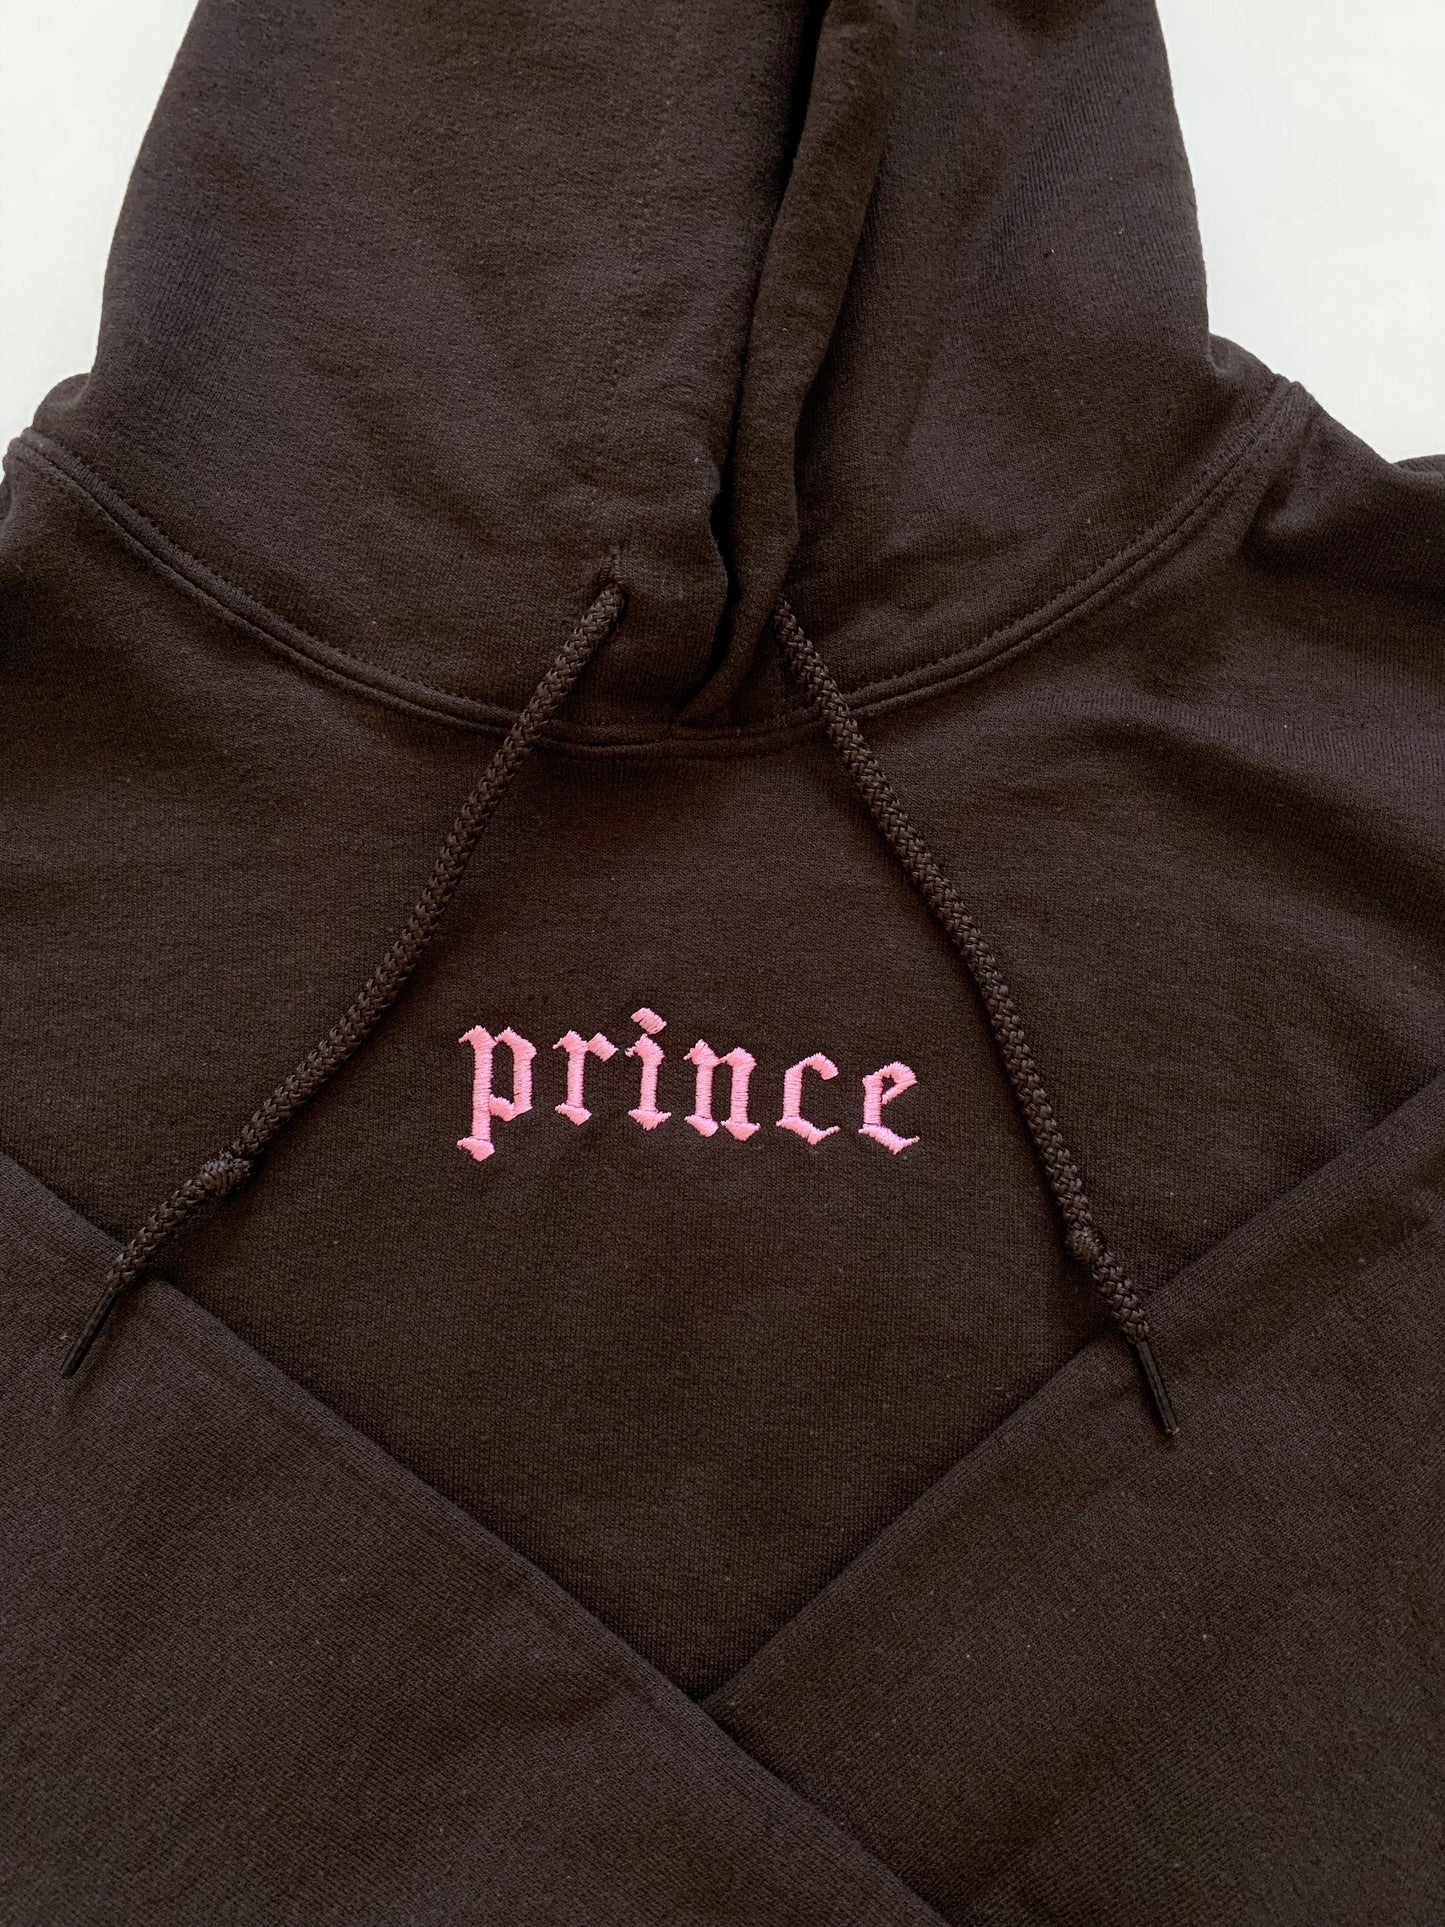 Princess and Prince Embroidered Matching Set